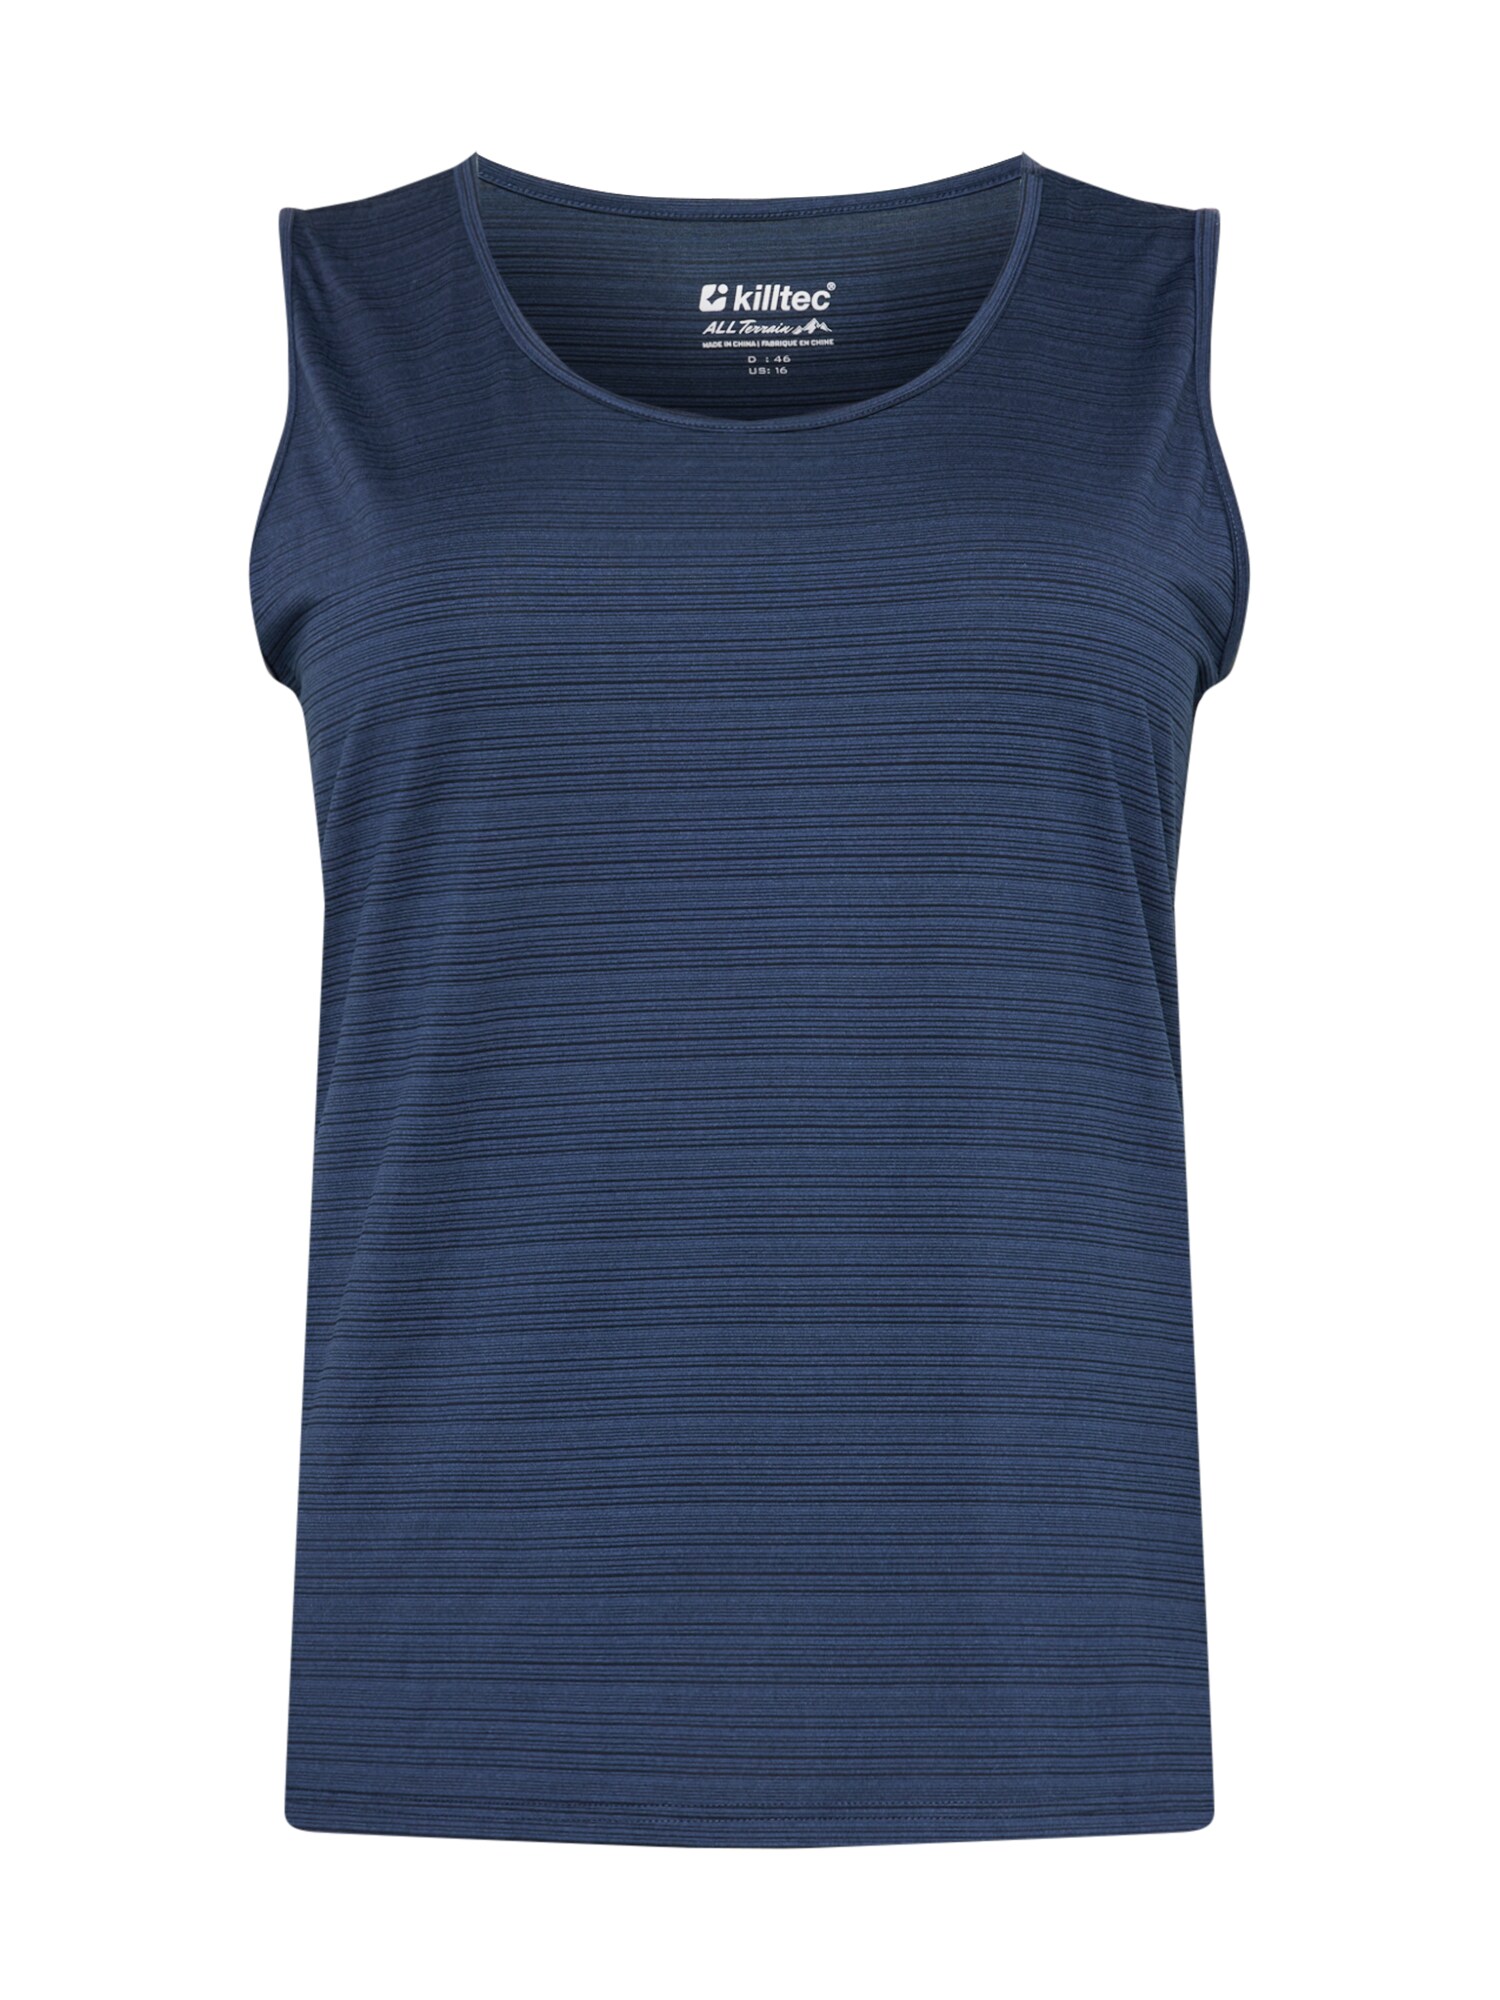 G.I.G.A. DX by killtec Sportiniai marškinėliai be rankovių tamsiai mėlyna jūros spalva / tamsiai mėlyna